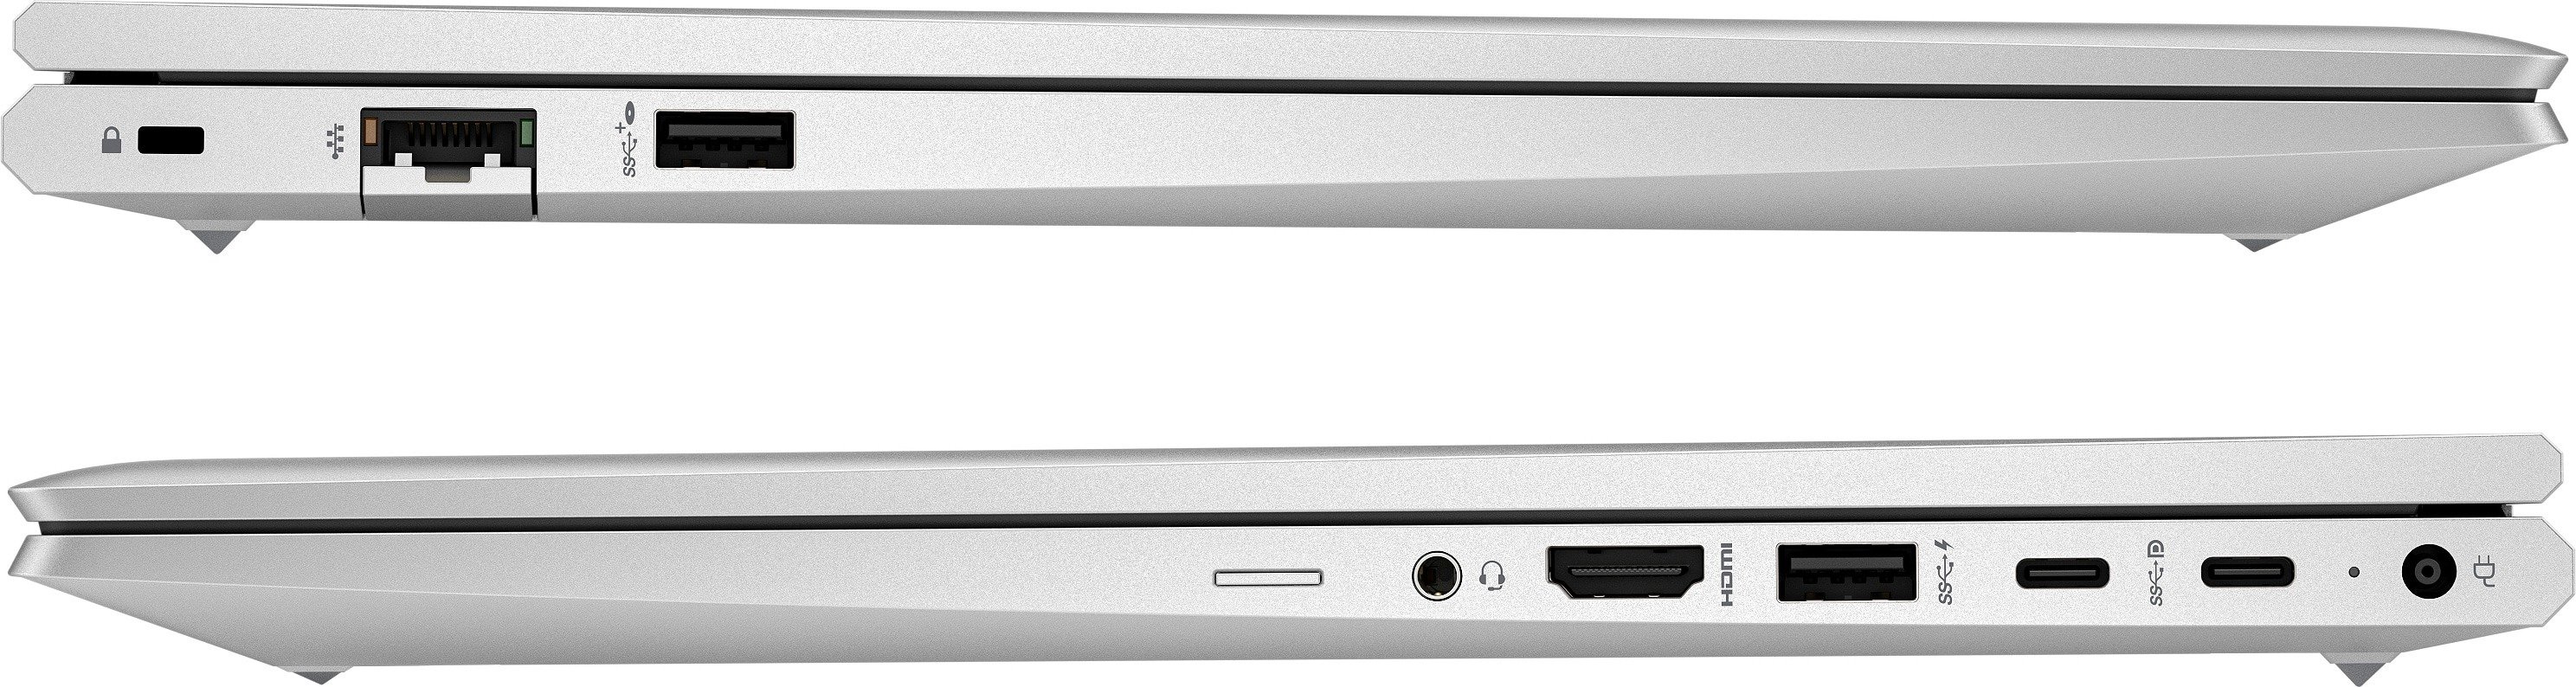 Ноутбук HP Probook 450-G10 (85D07EA)фото8